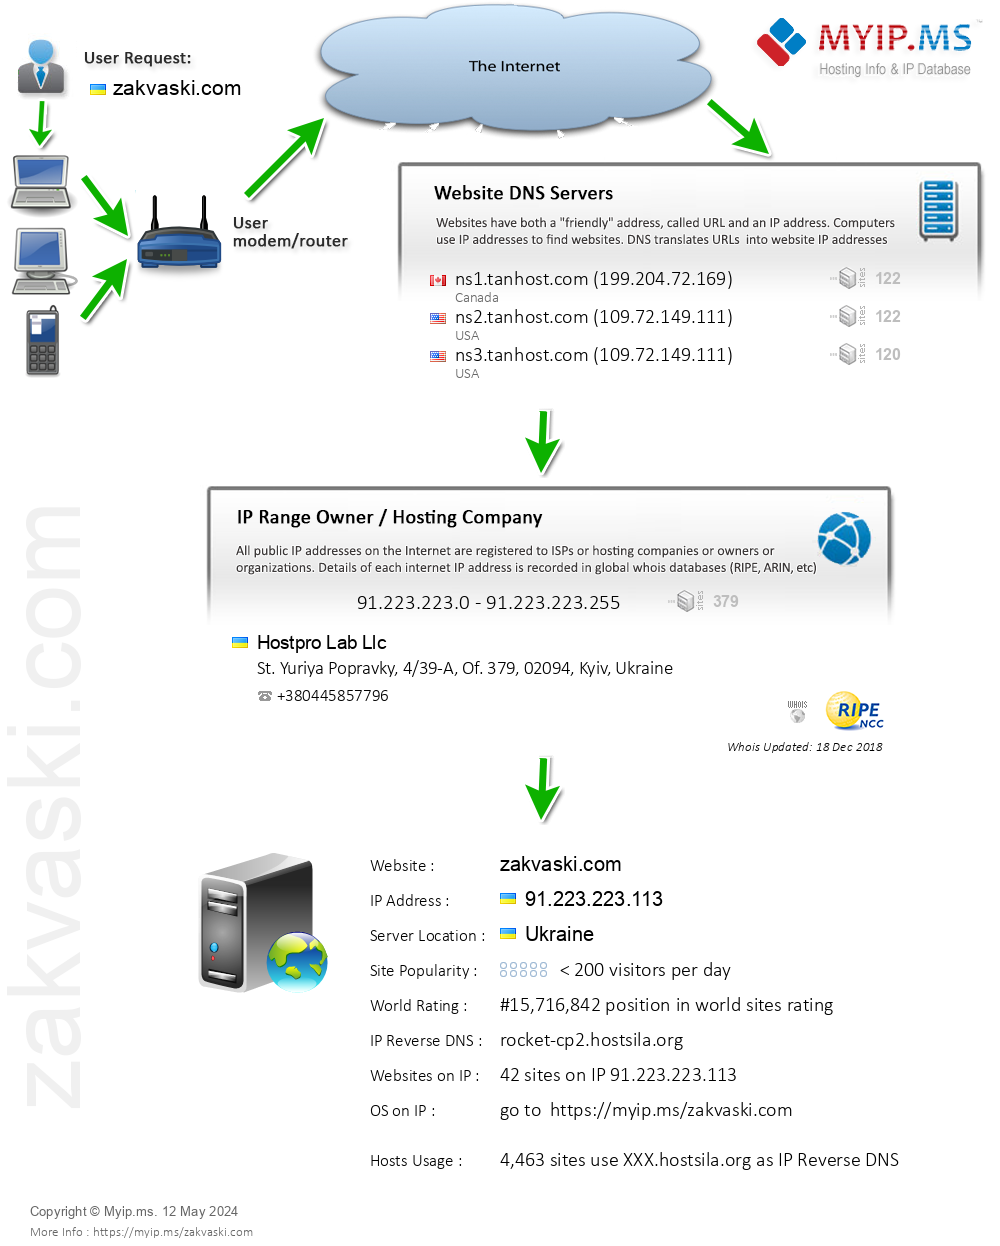 Zakvaski.com - Website Hosting Visual IP Diagram